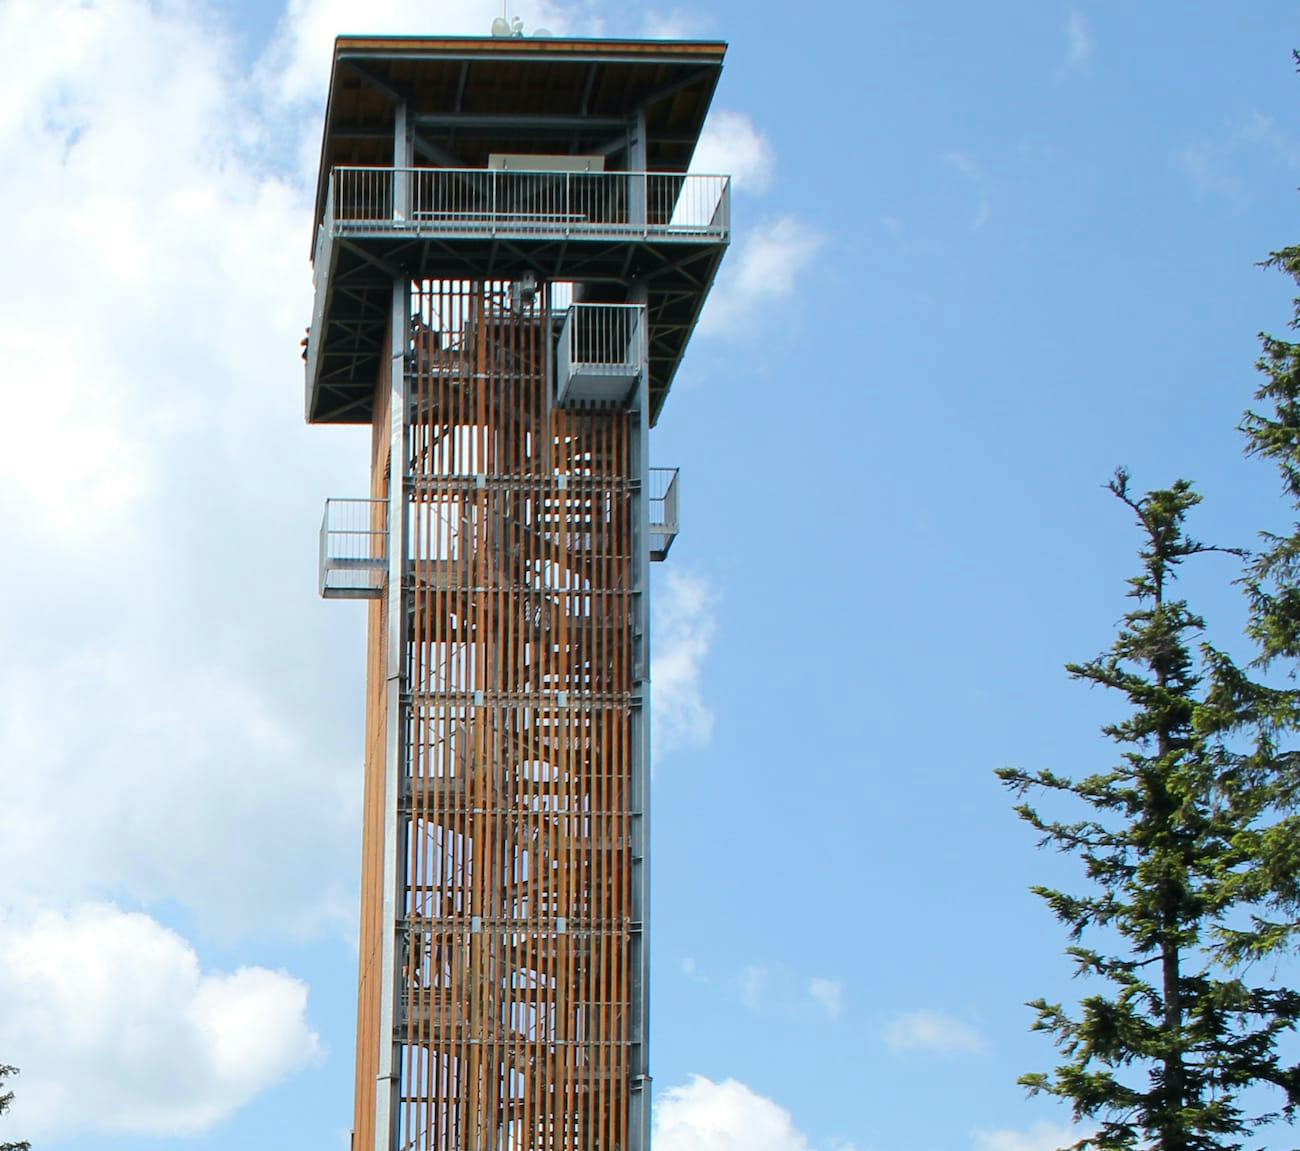 Šumava National Park - Špičák Lookout Tower